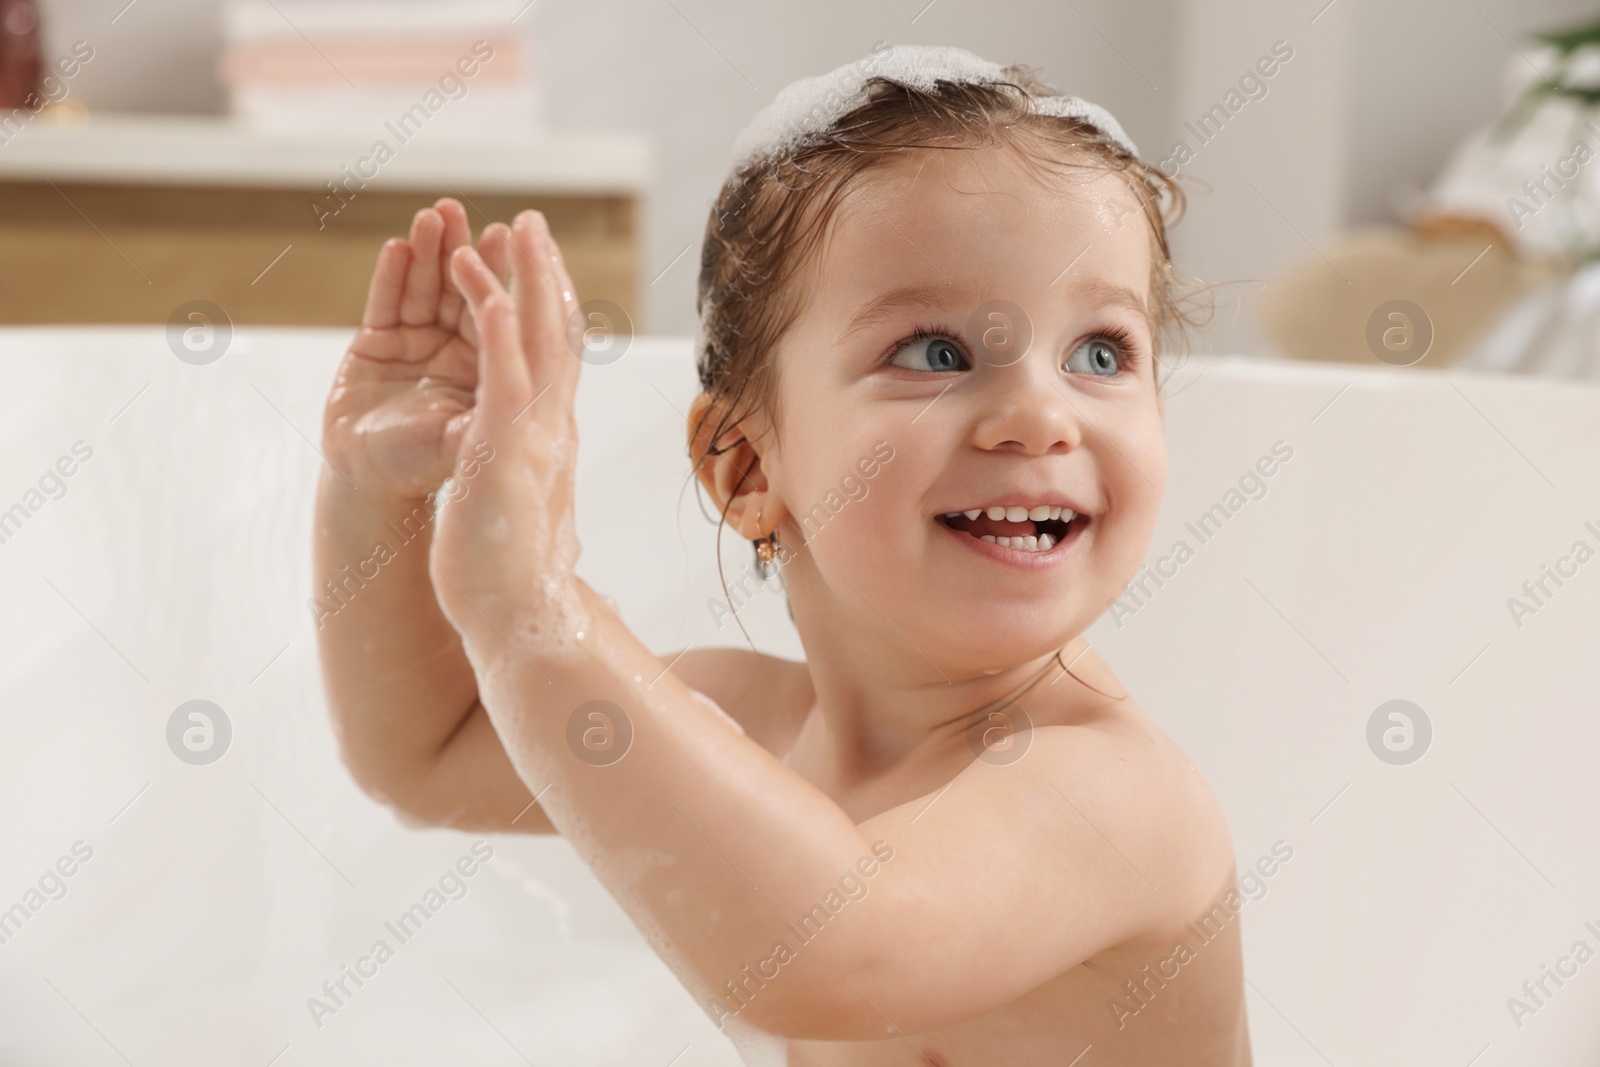 Photo of Cute little girl washing hair with shampoo in bathroom